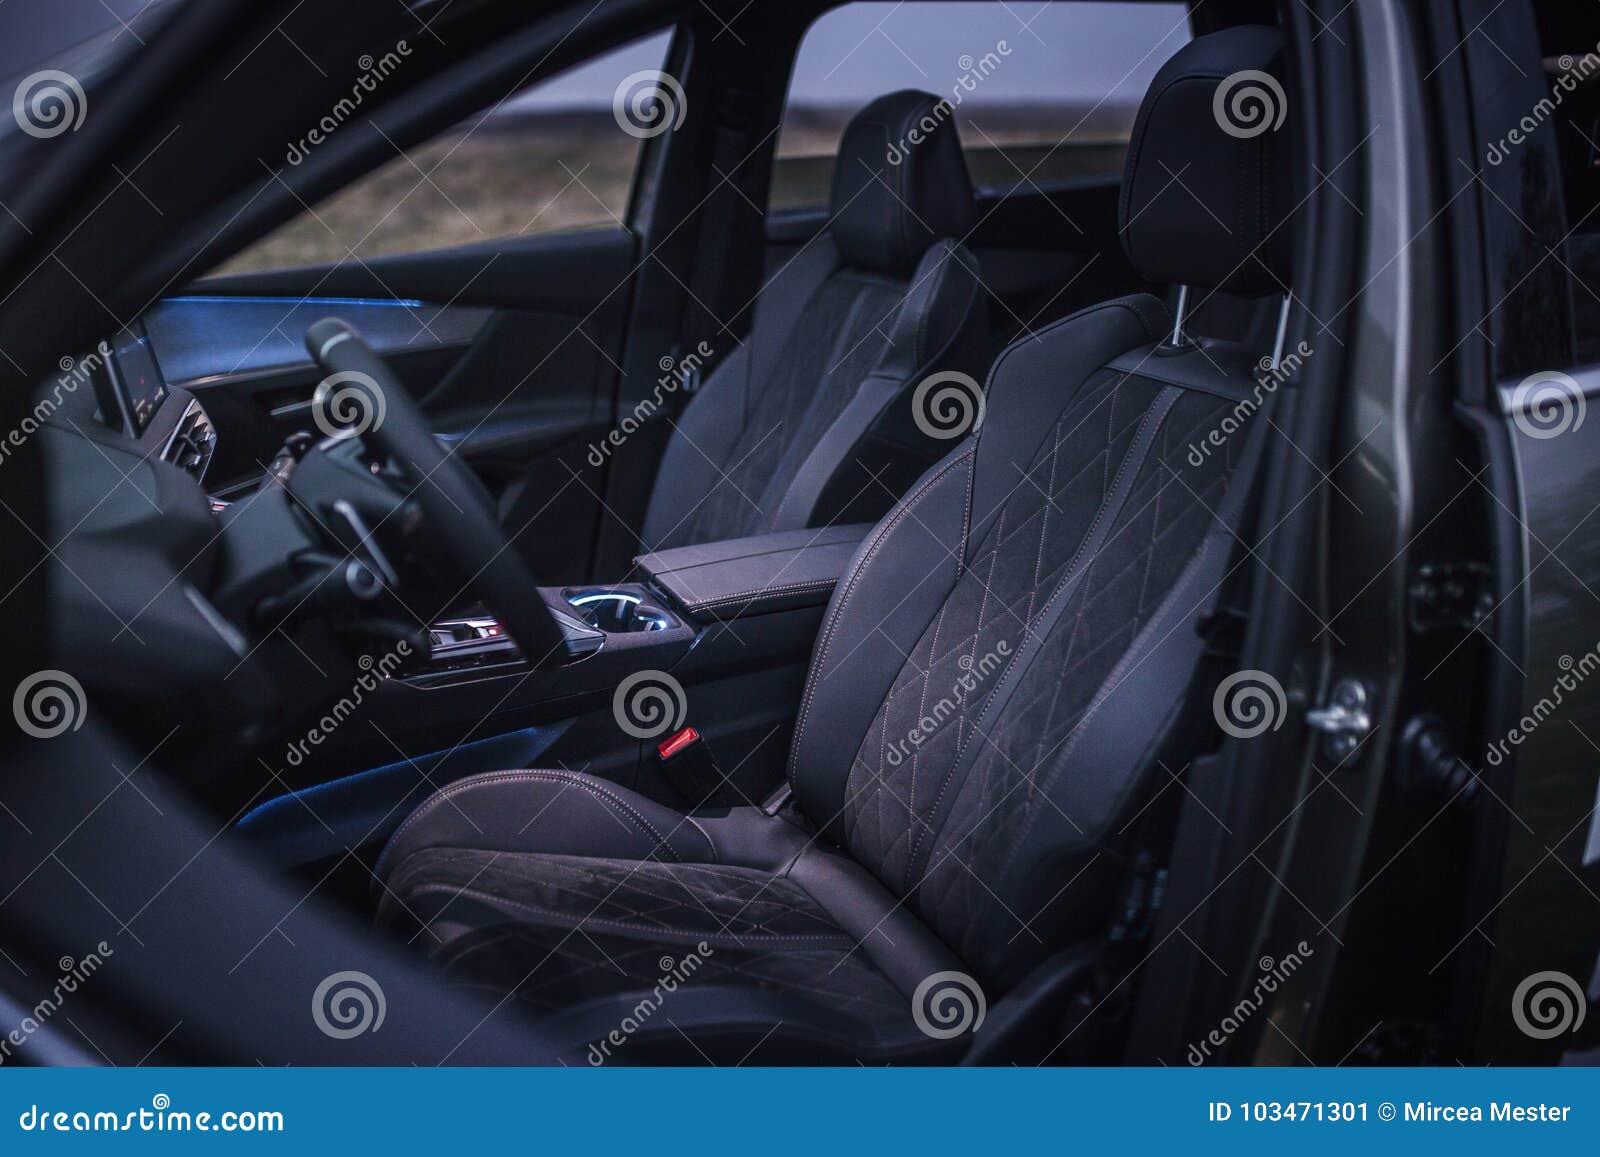 https://thumbs.dreamstime.com/z/auto-innenraum-front-car-seats-103471301.jpg